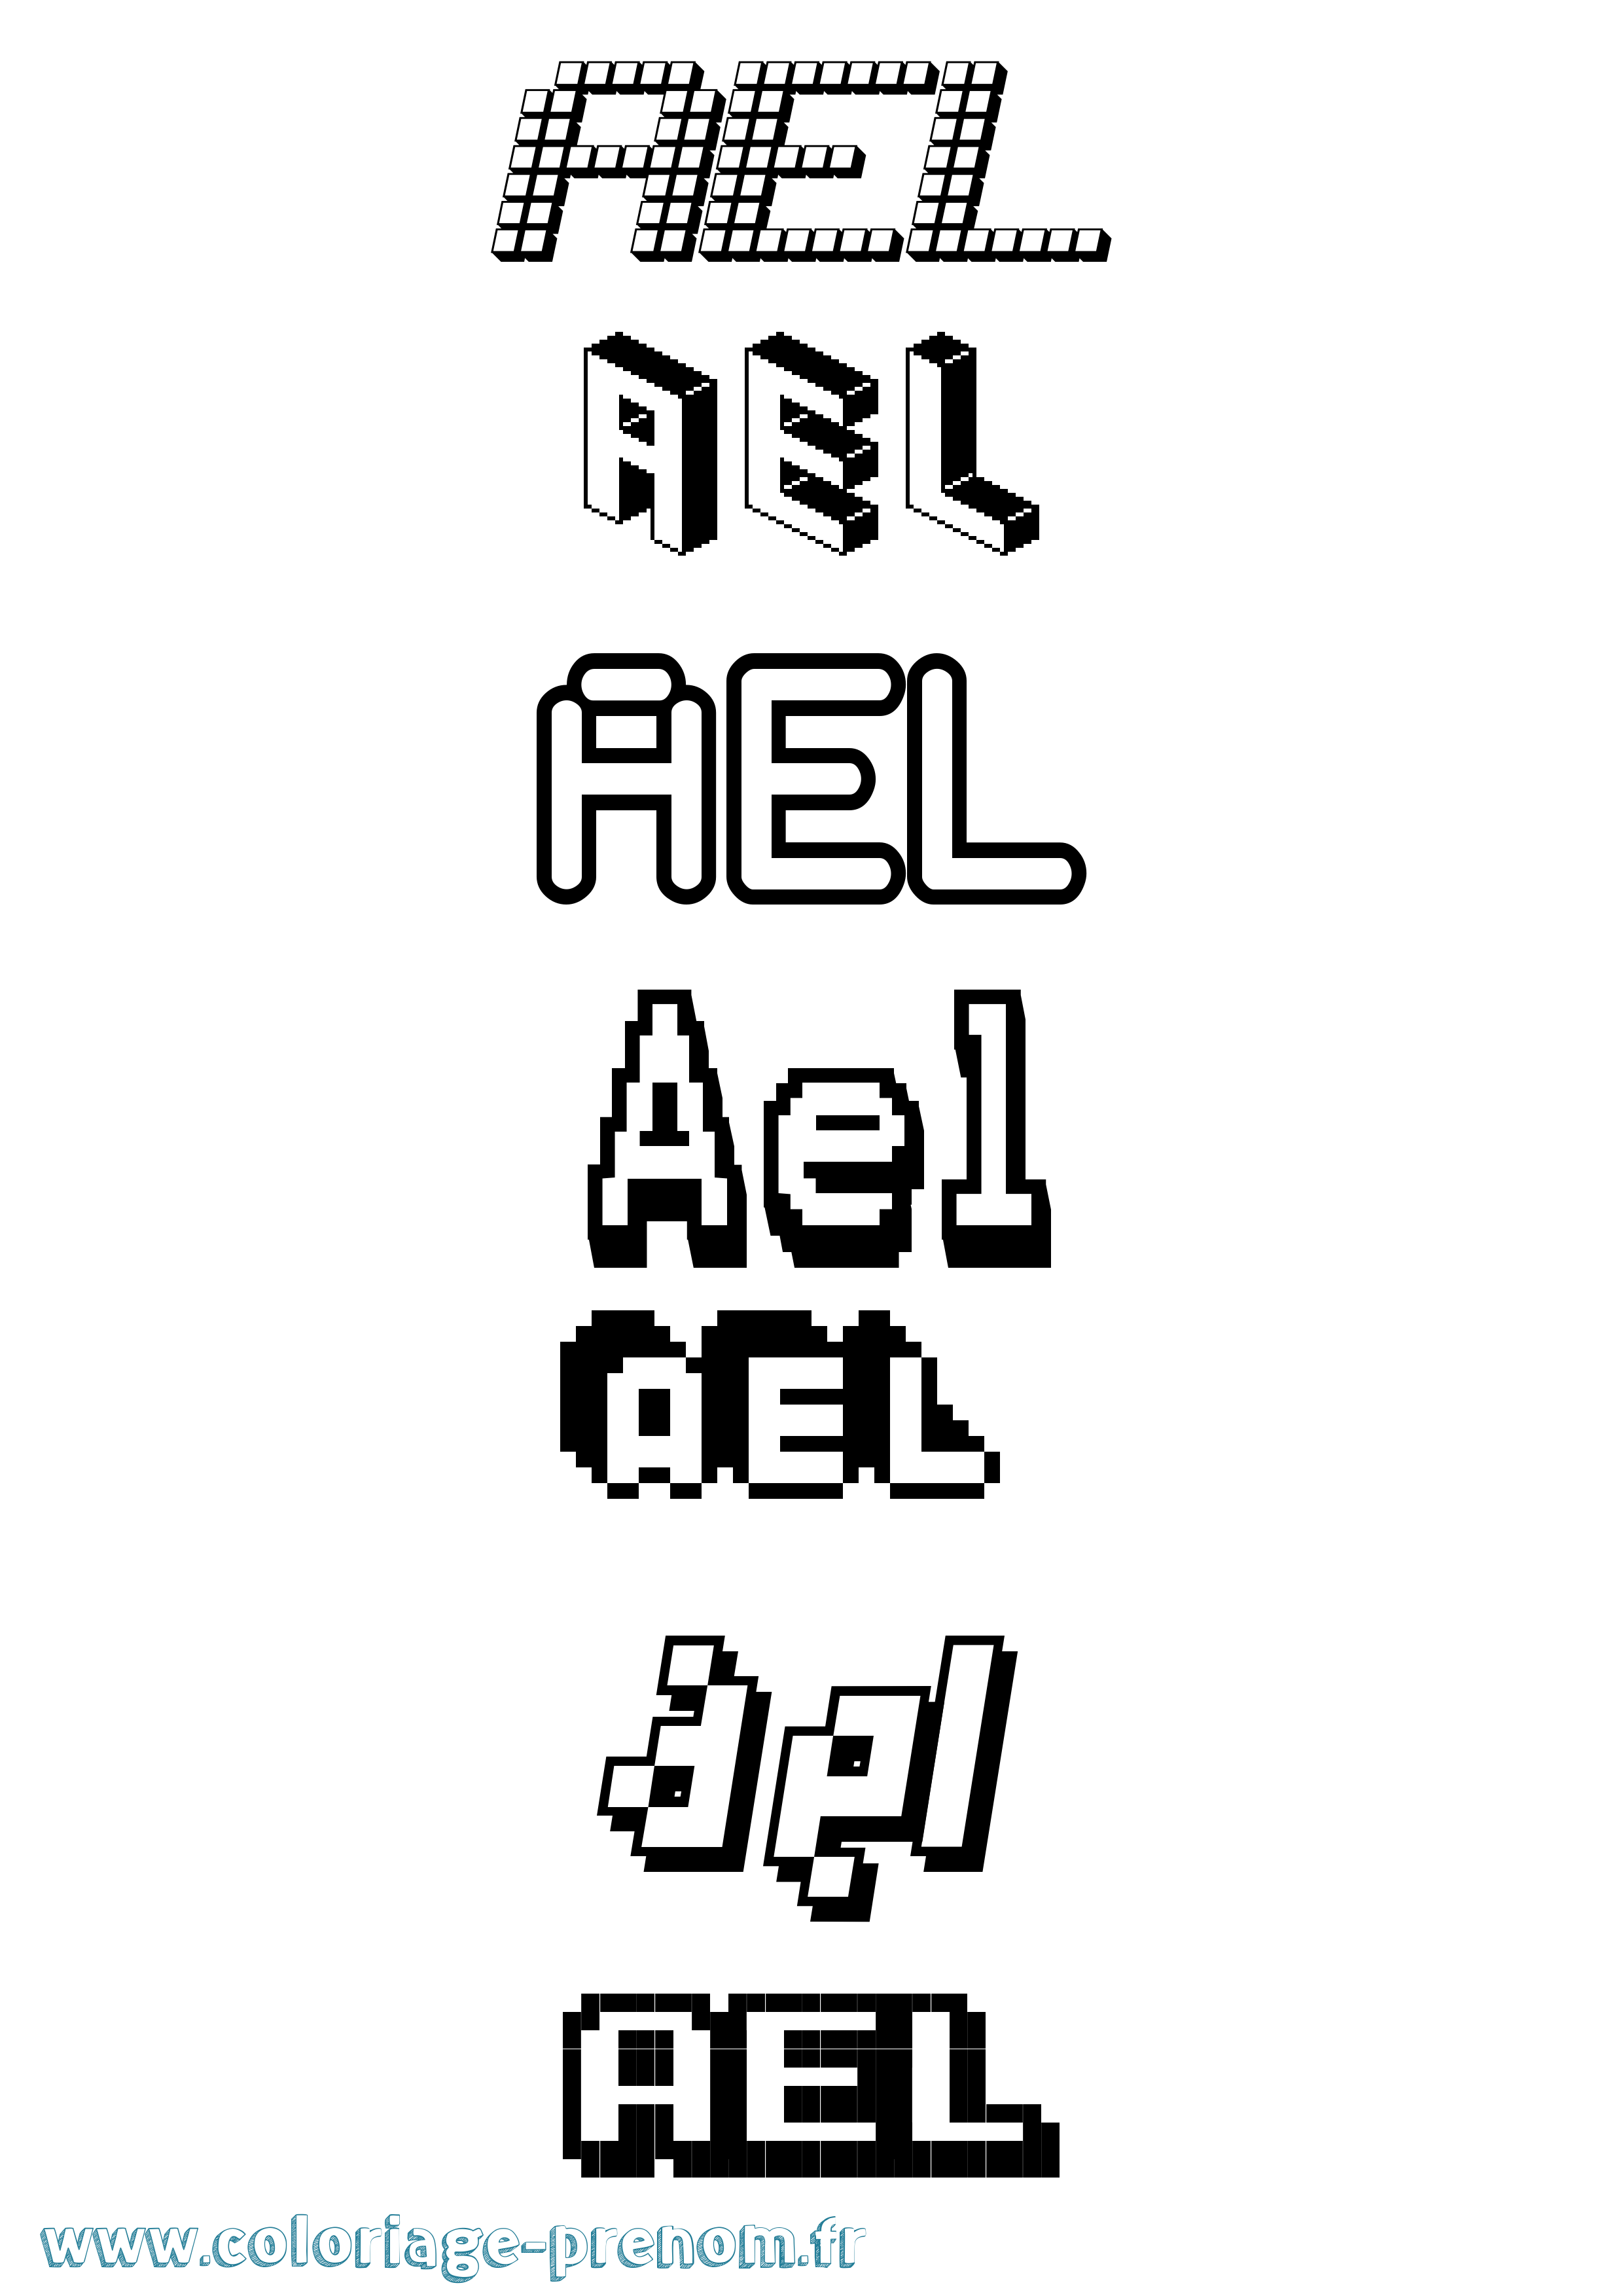 Coloriage prénom Ael Pixel